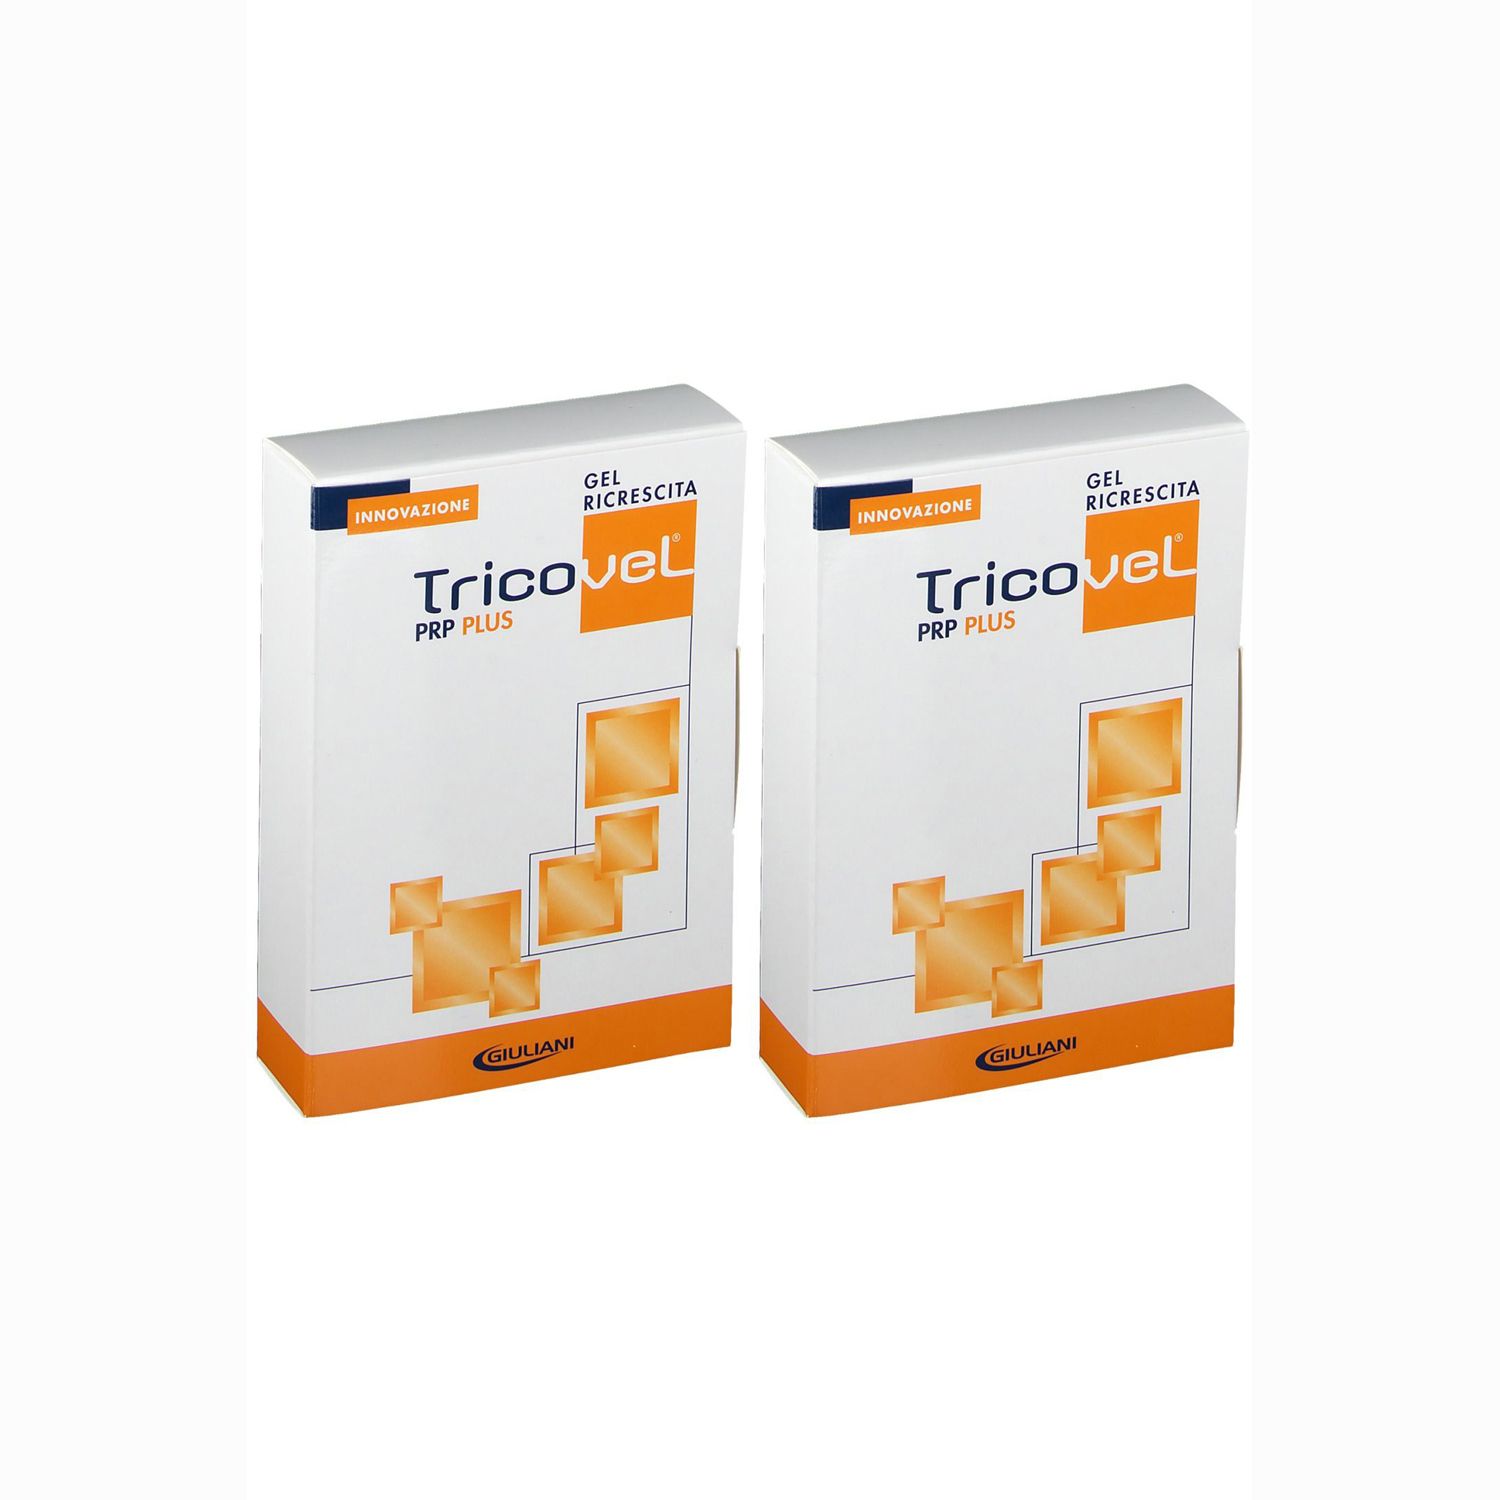 Tricovel® PRP Plus Gel Ricrescita